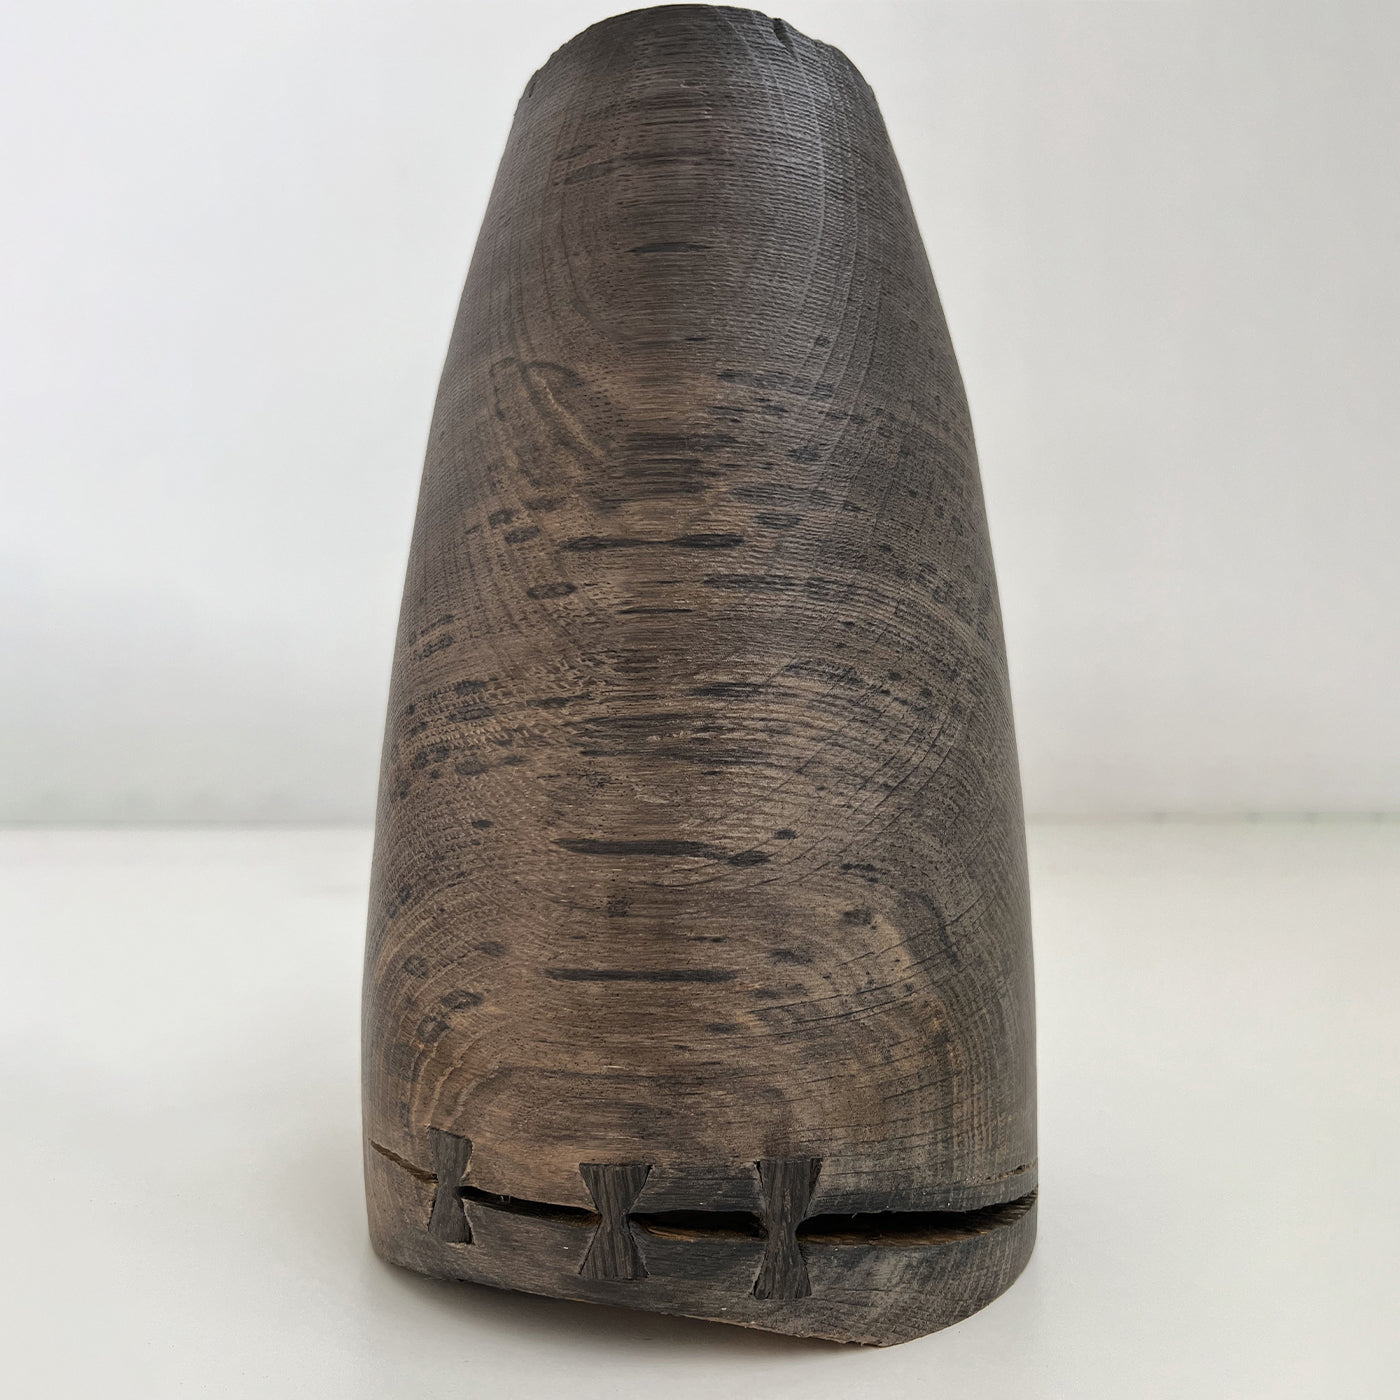 Fossil Oak Hollow Vase #2 - Alternative view 1